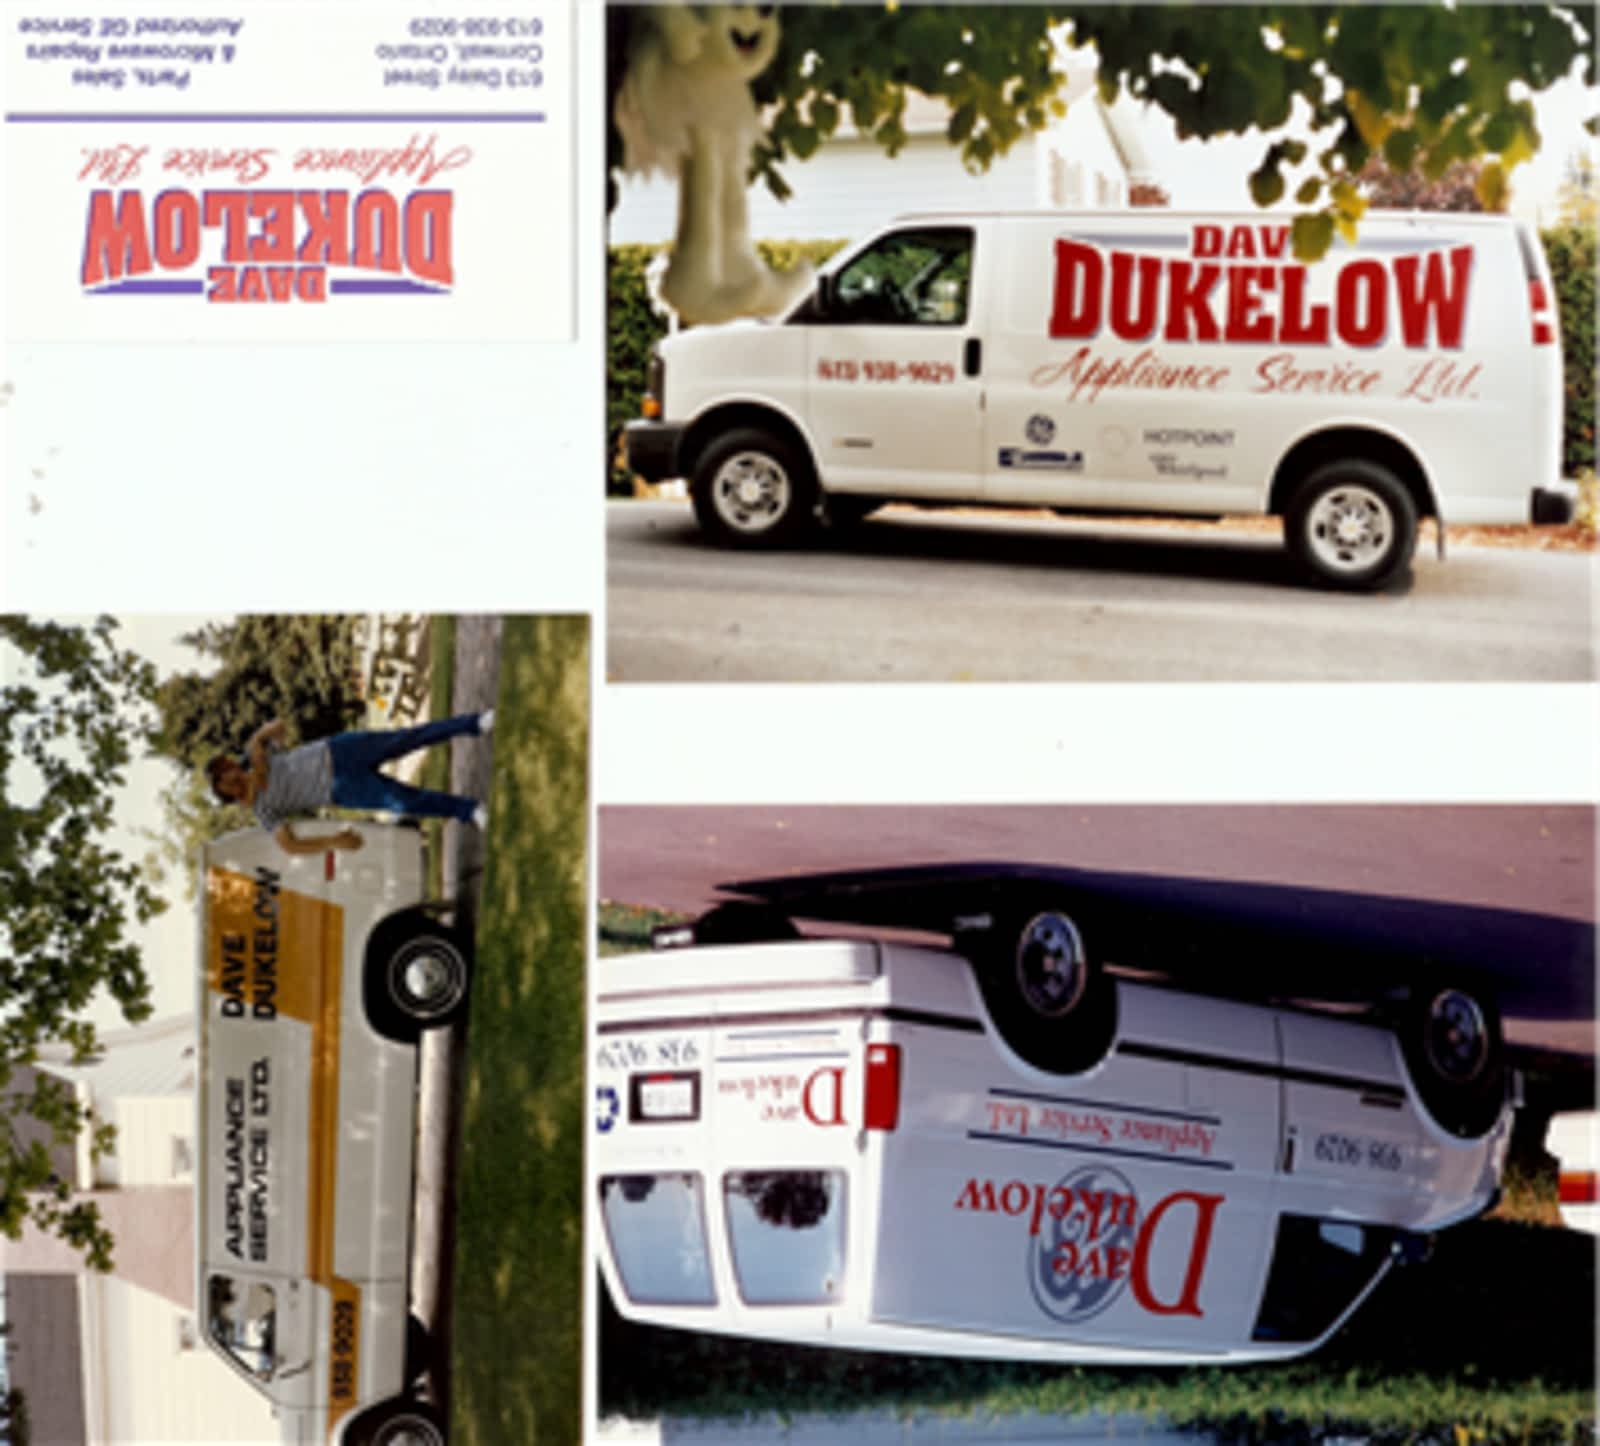 Dukelow Dave Appliance Service Ltd